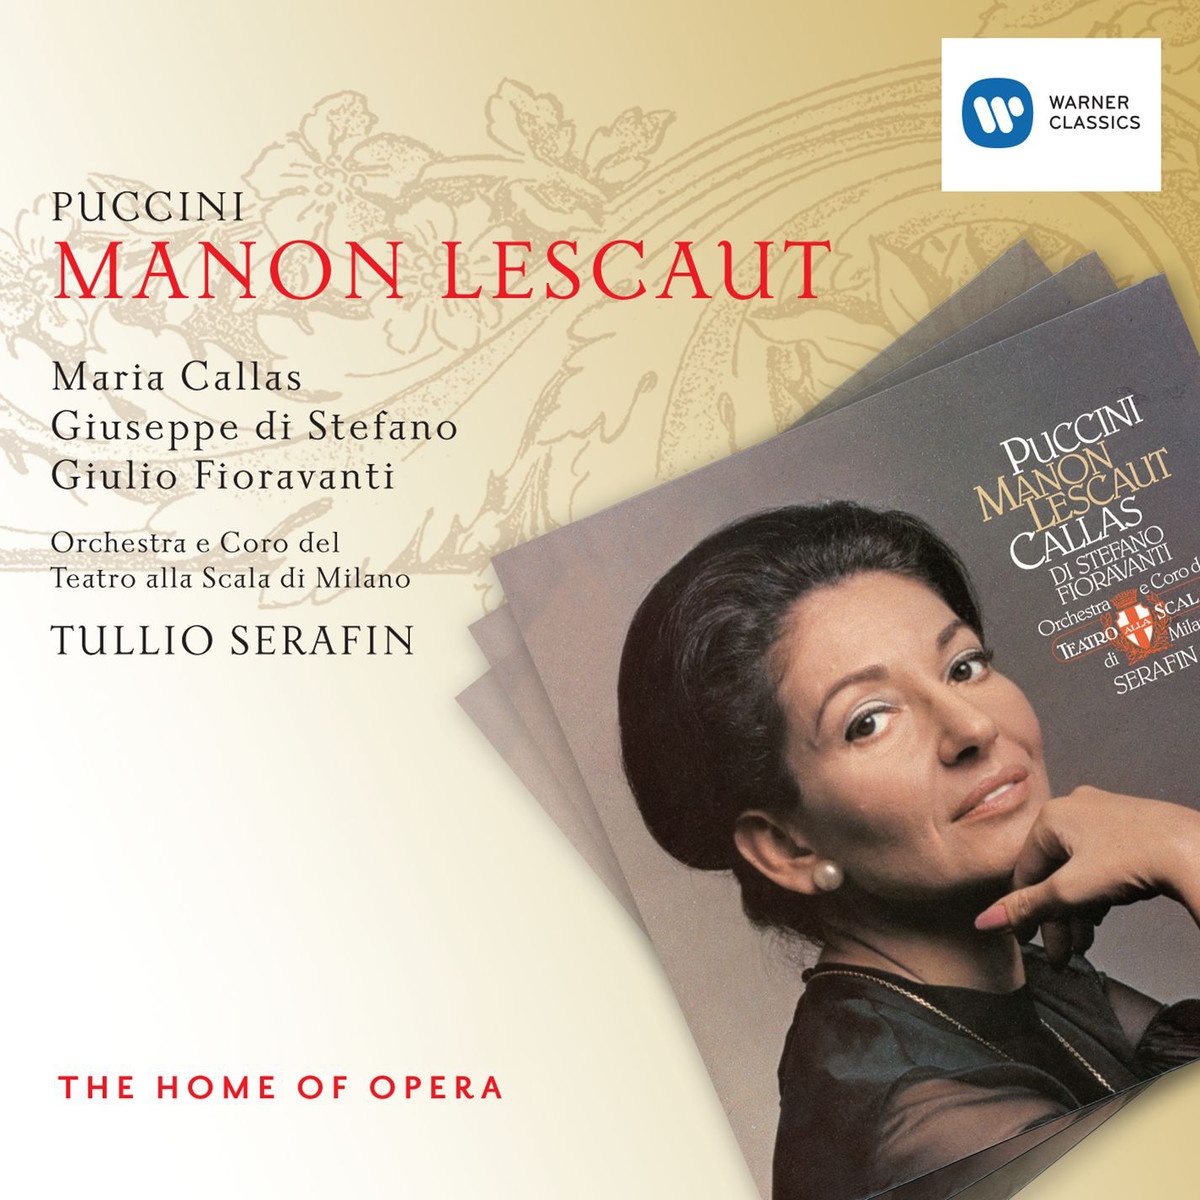 Manon Lescaut, ATTO QUARTO ACT 4 VIERTER AKT QUATRIÈ ME ACTE: Sola, perduta, abbandonata Manon Des Grieux